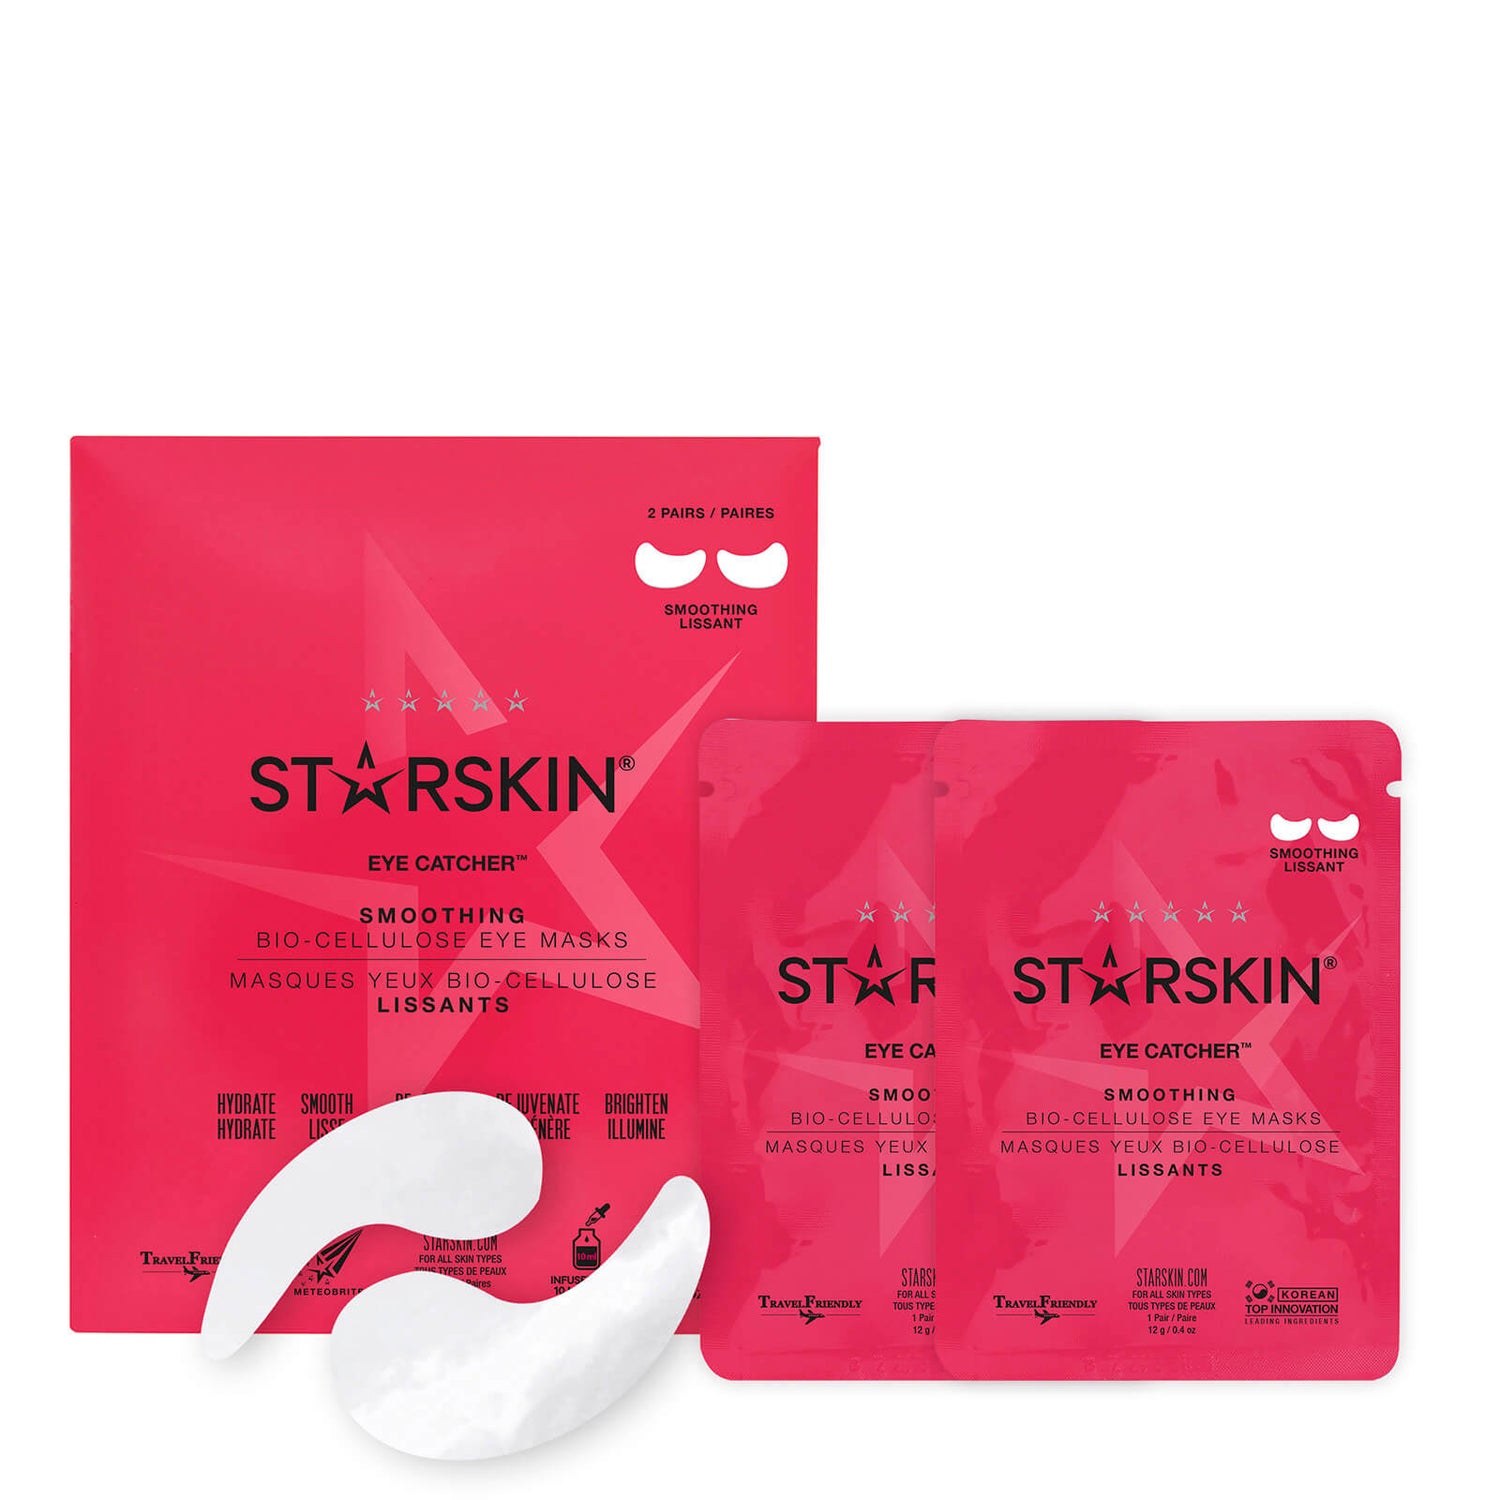 STARSKIN Eye Catcher™ Smoothing Coconut Bio-Cellulose Second Skin Eye Mask (2 Units)